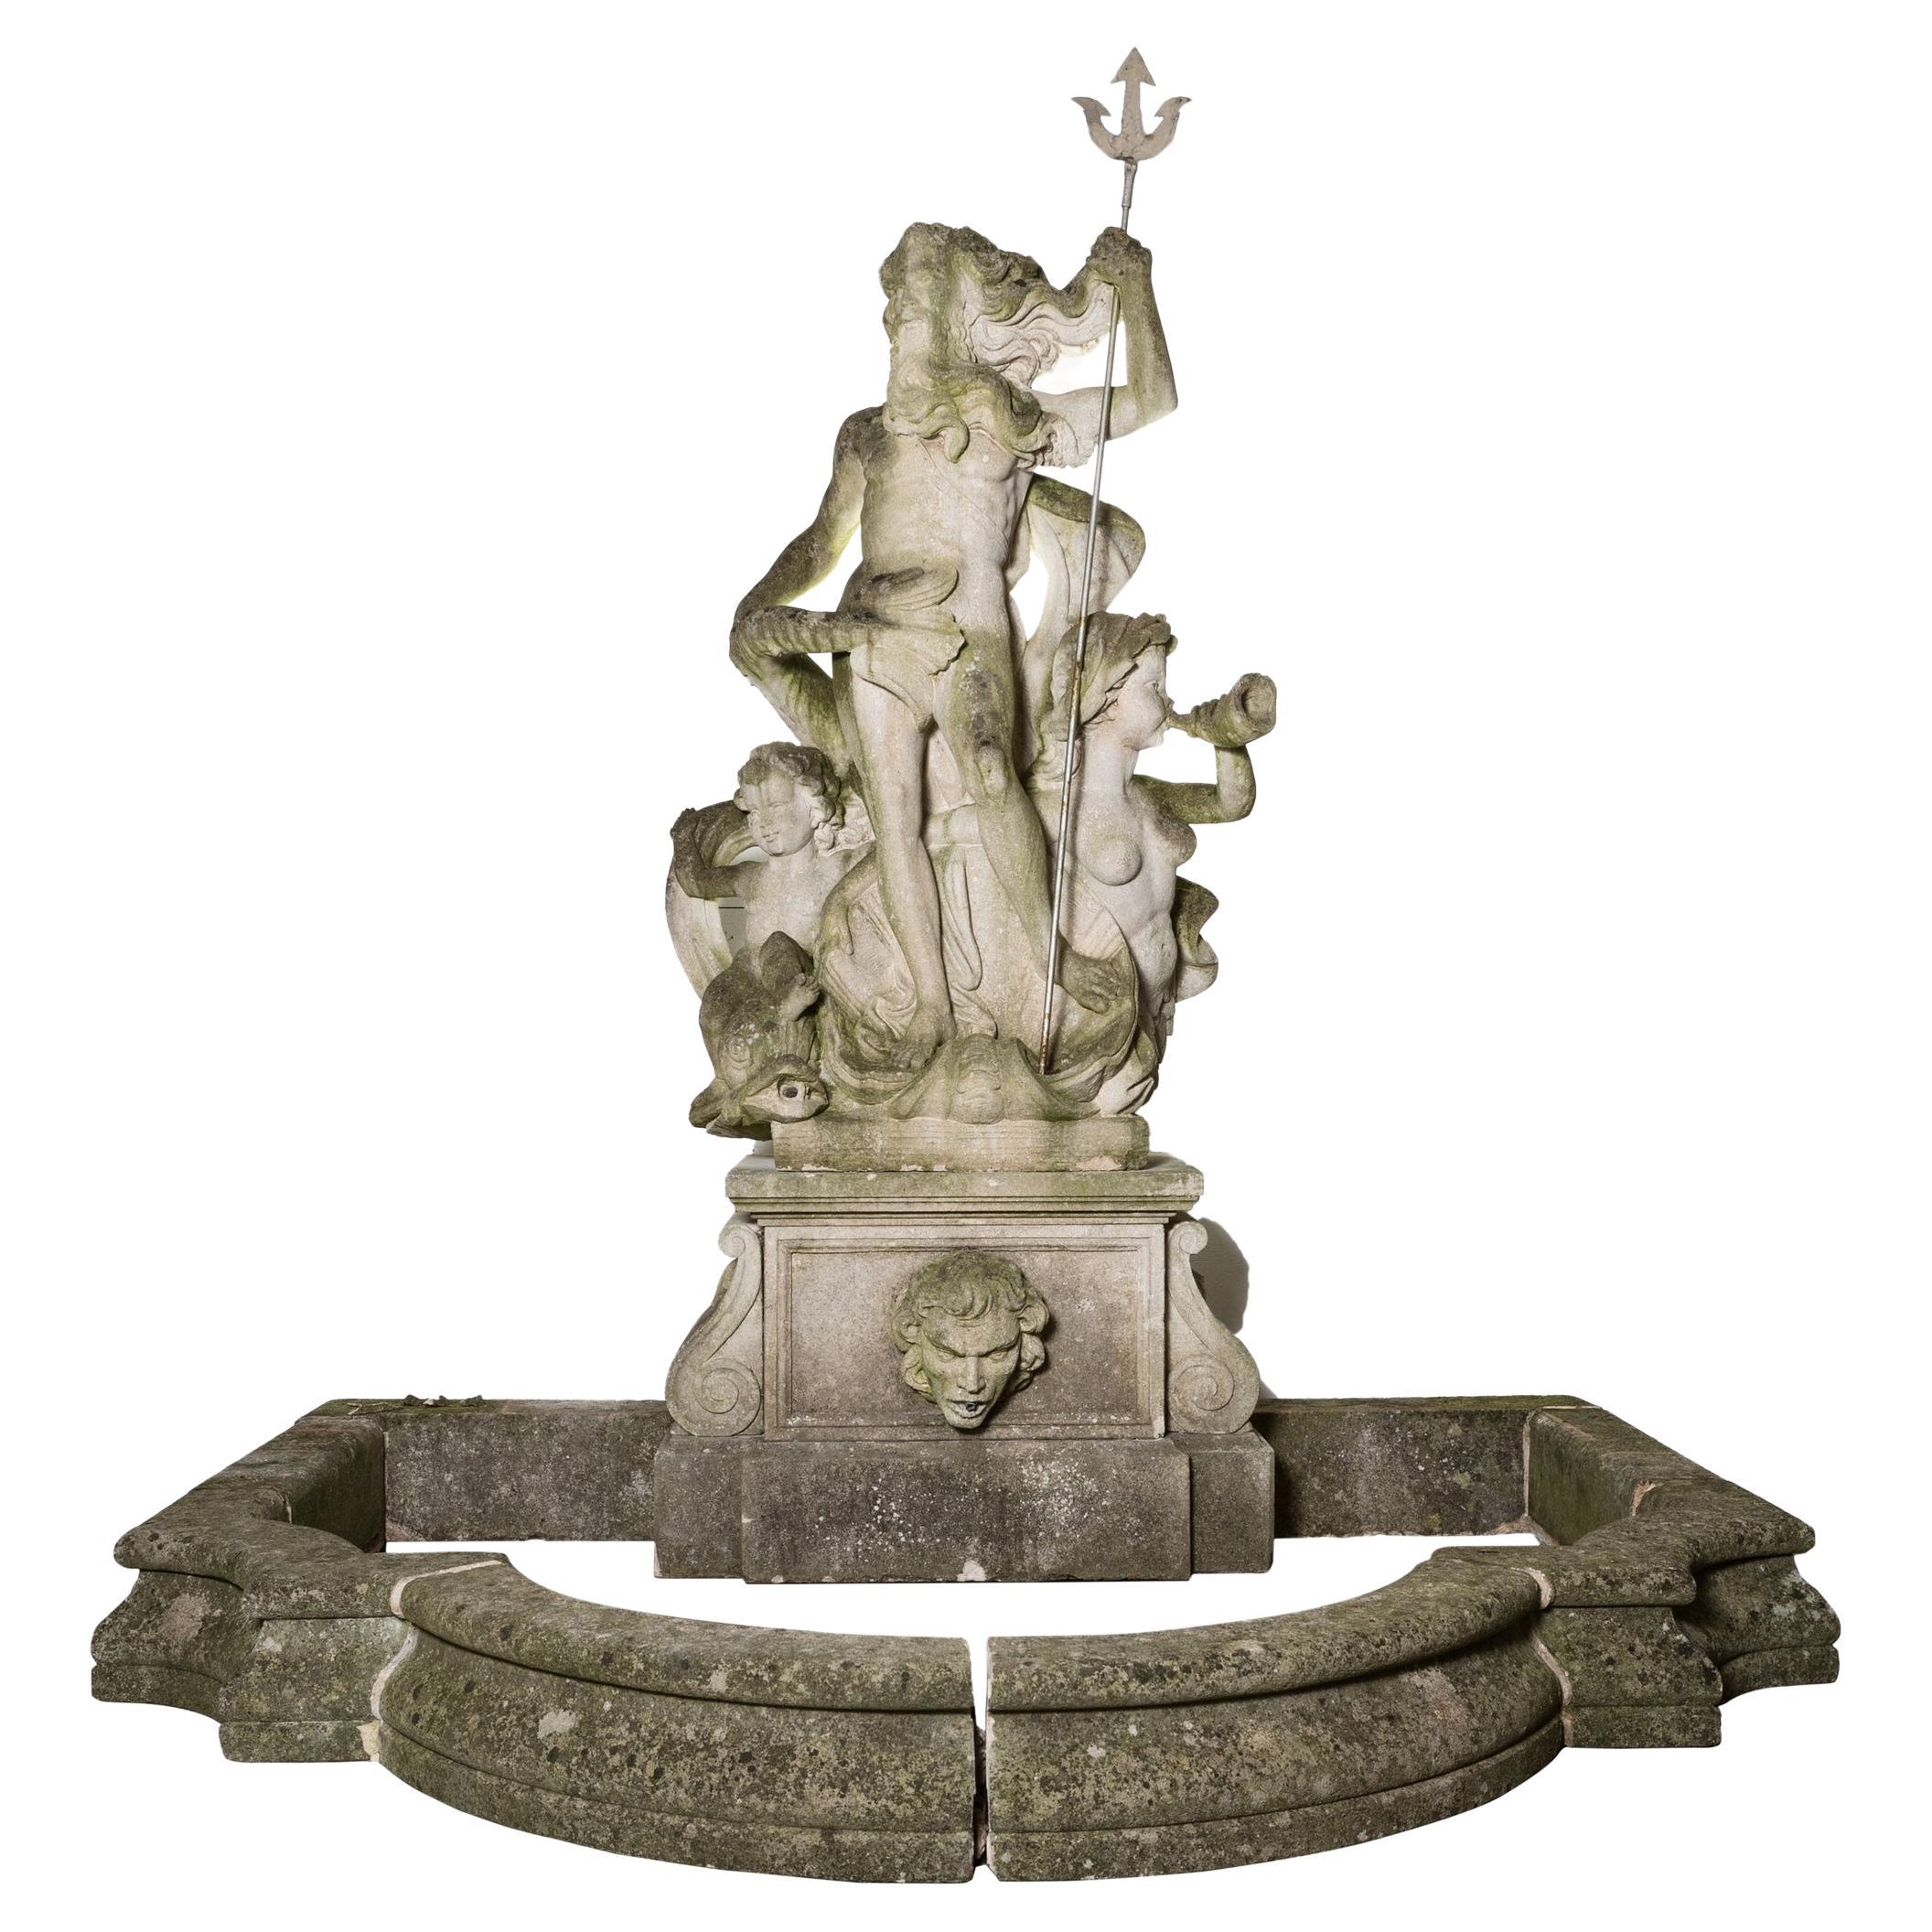 Spectacular Portland Stone Neptune / Poseidon Statue Fountain For Sale